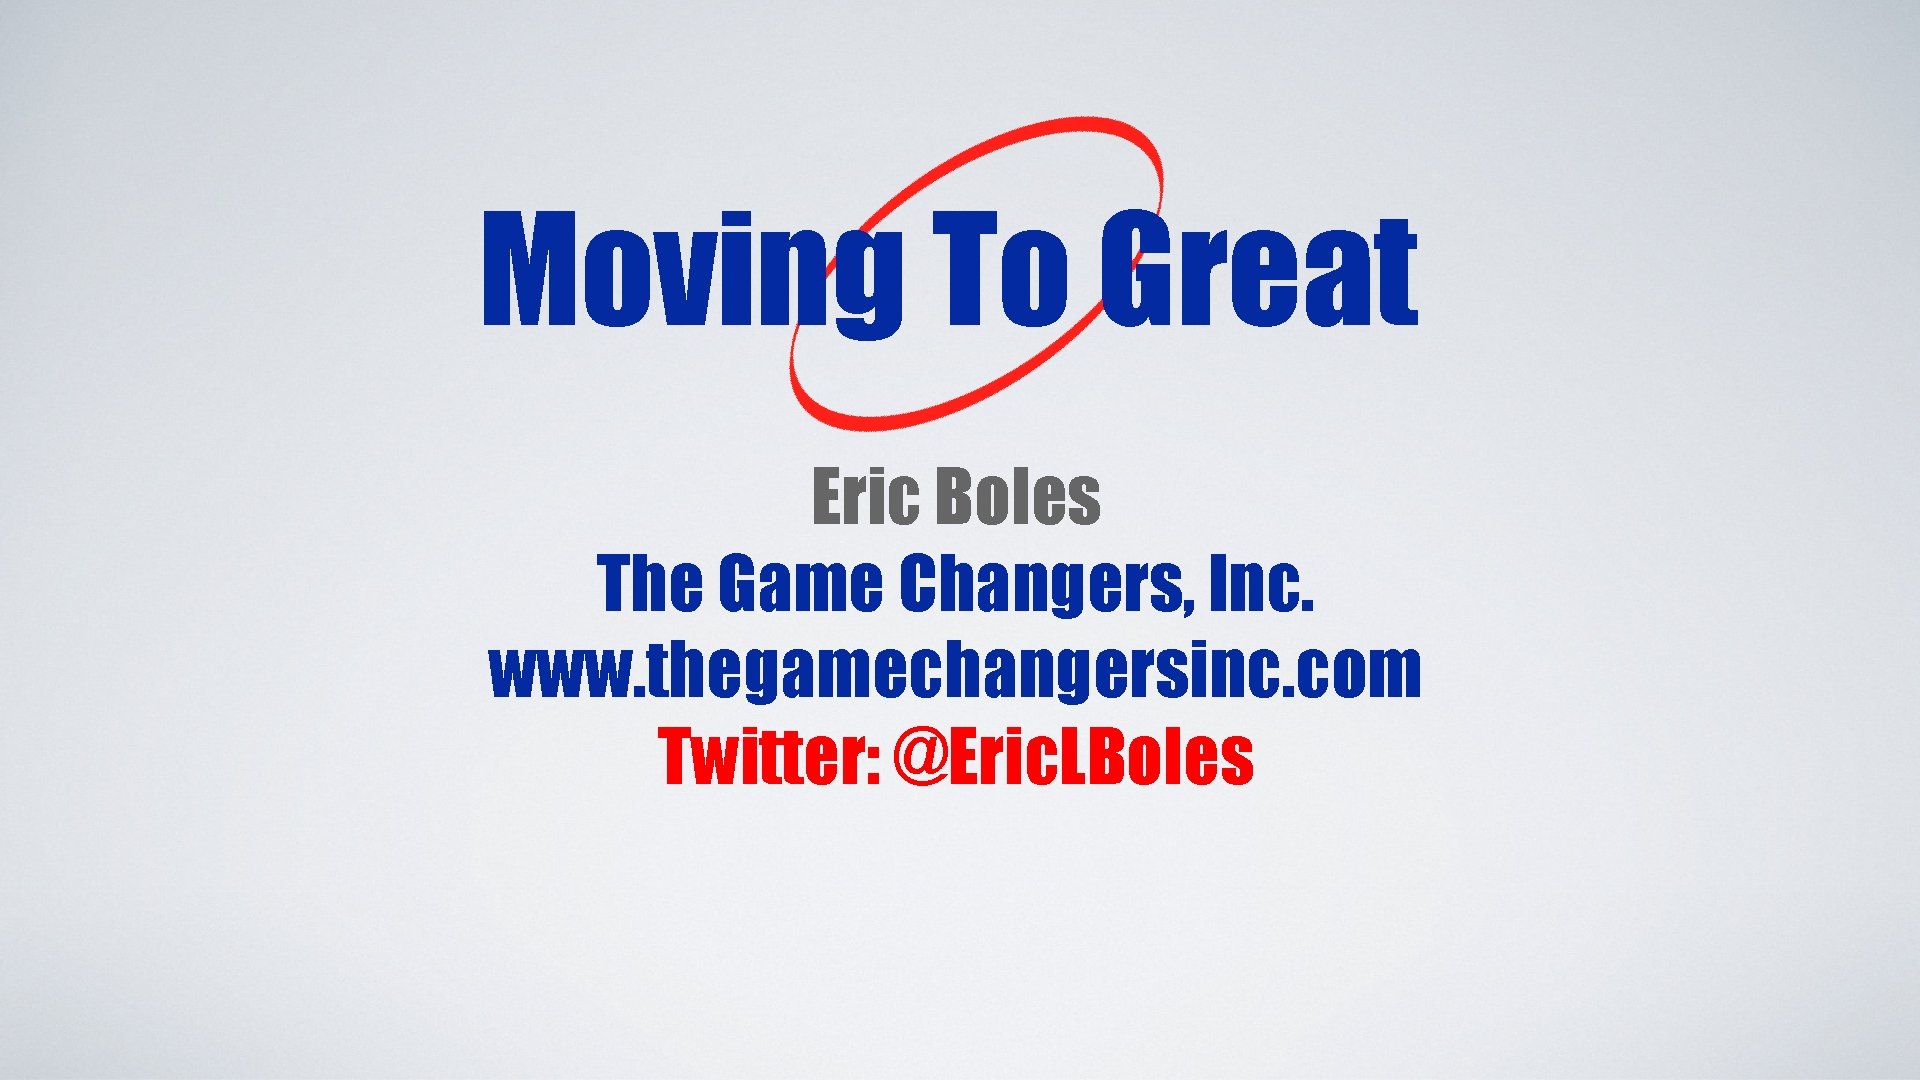 Moving To Great Eric Boles The Game Changers, Inc. www. thegamechangersinc. com Twitter: @Eric.